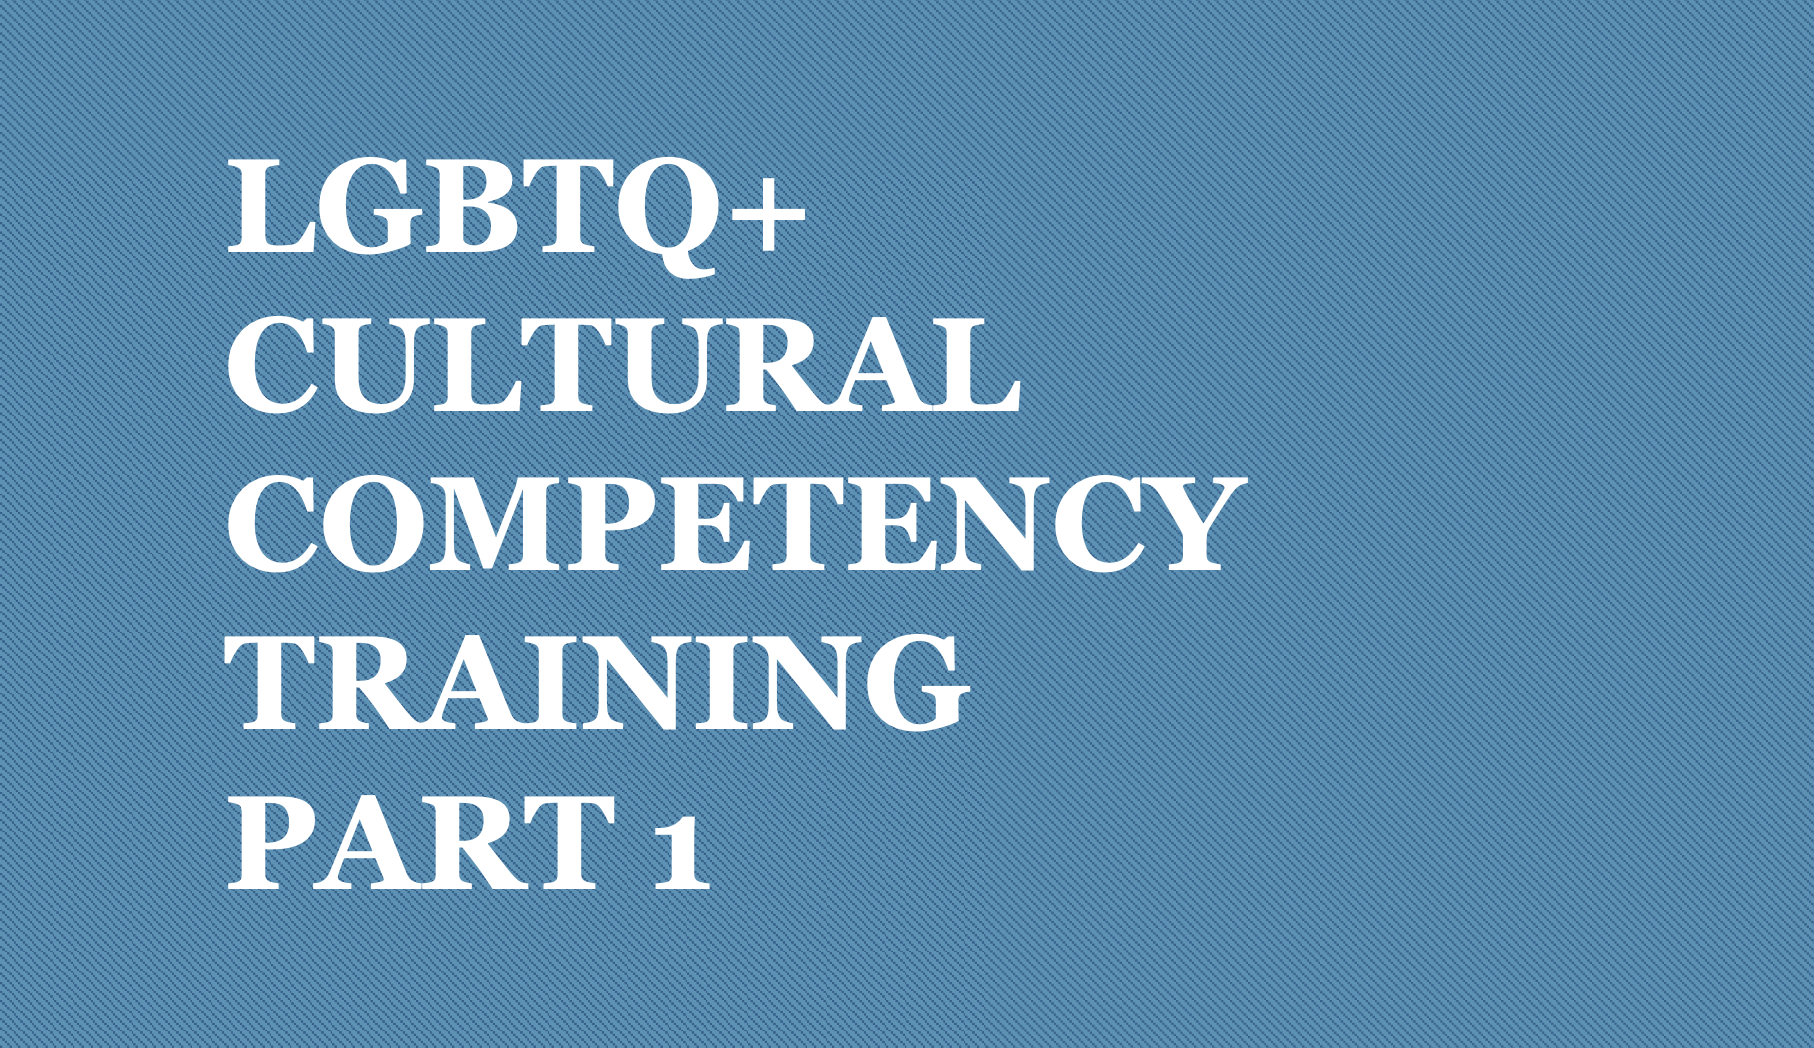 LGBTQ+ Cultural Competency Training Part 1